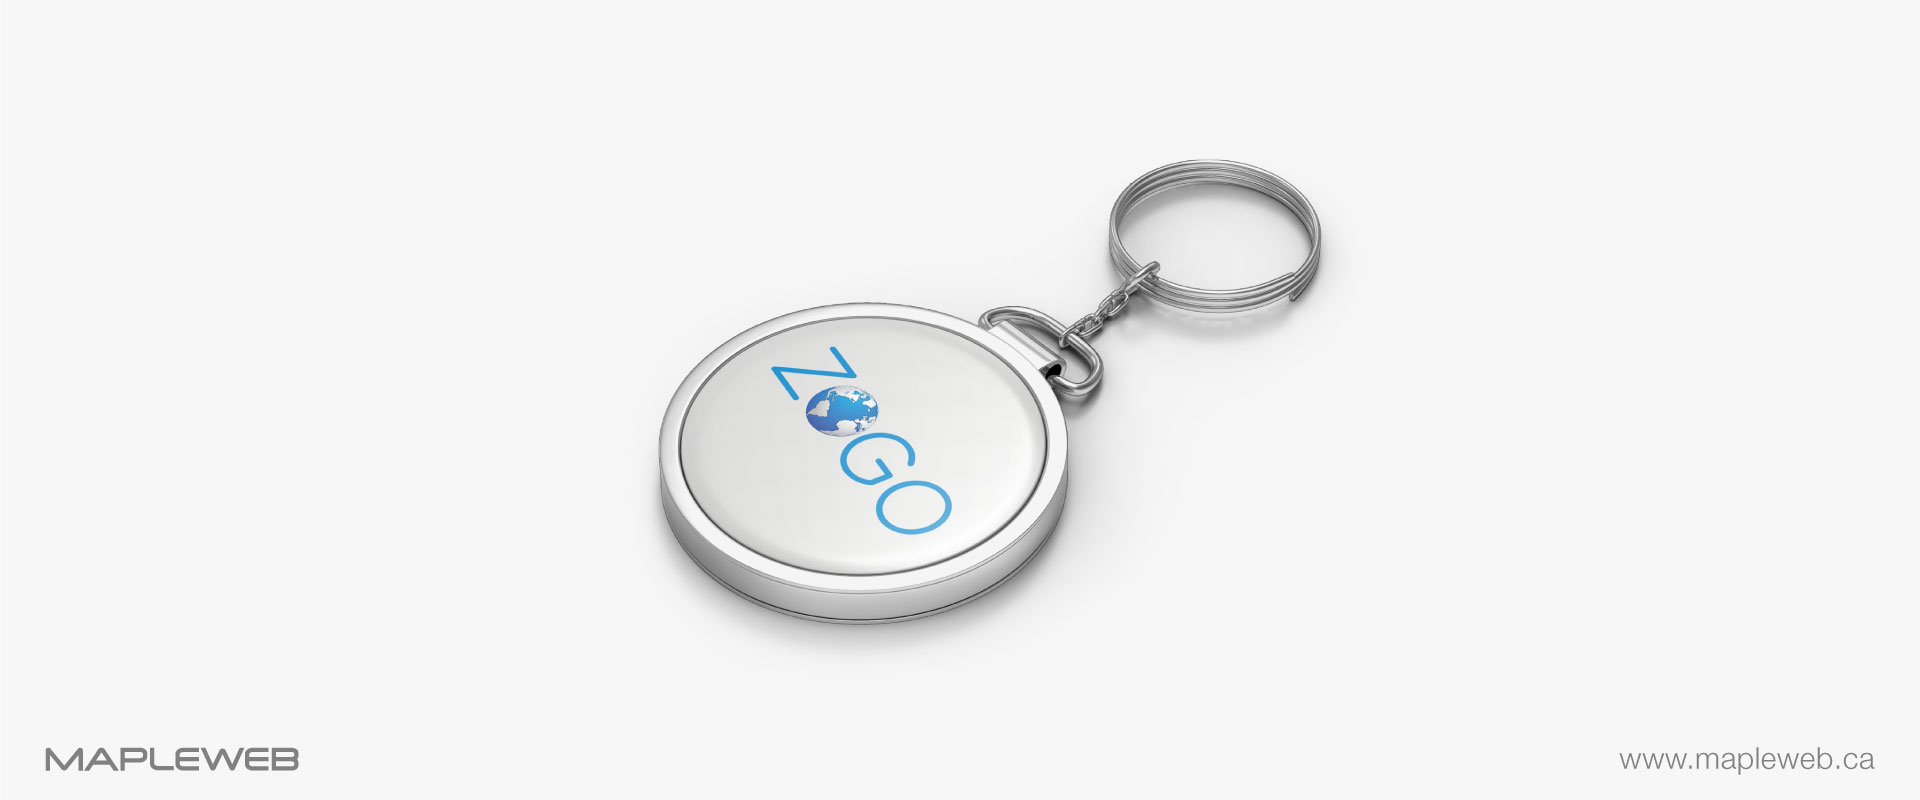 zogo-brand-logo-design-by-mapleweb-vancouver-canada-keychain-mock